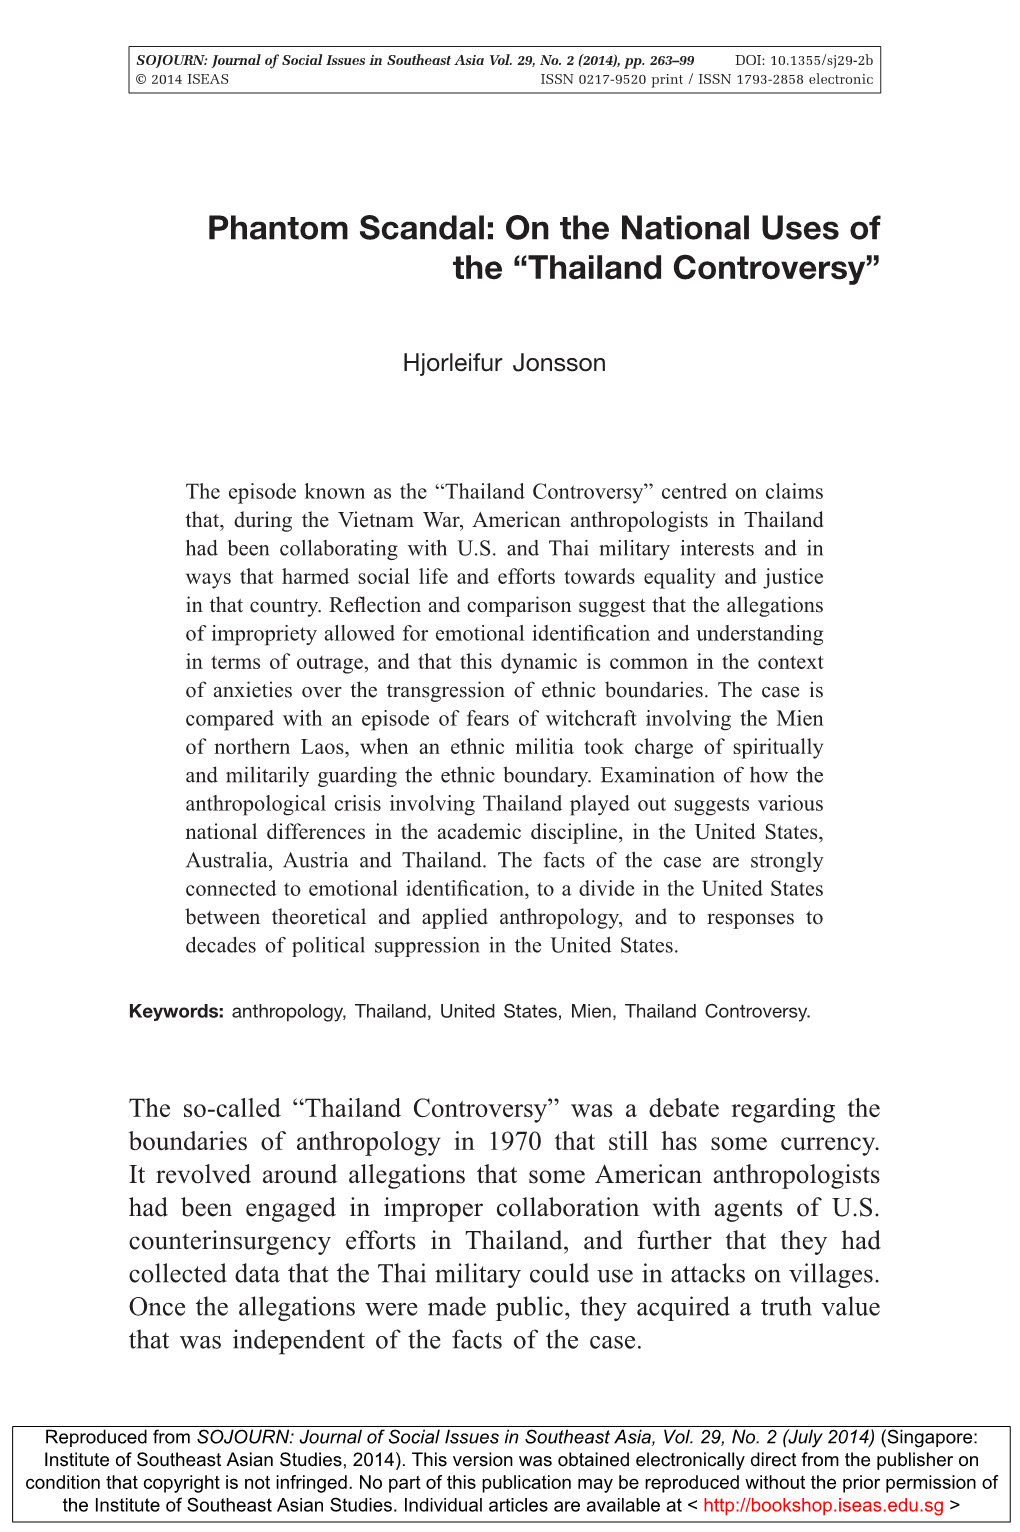 Thailand Controversy